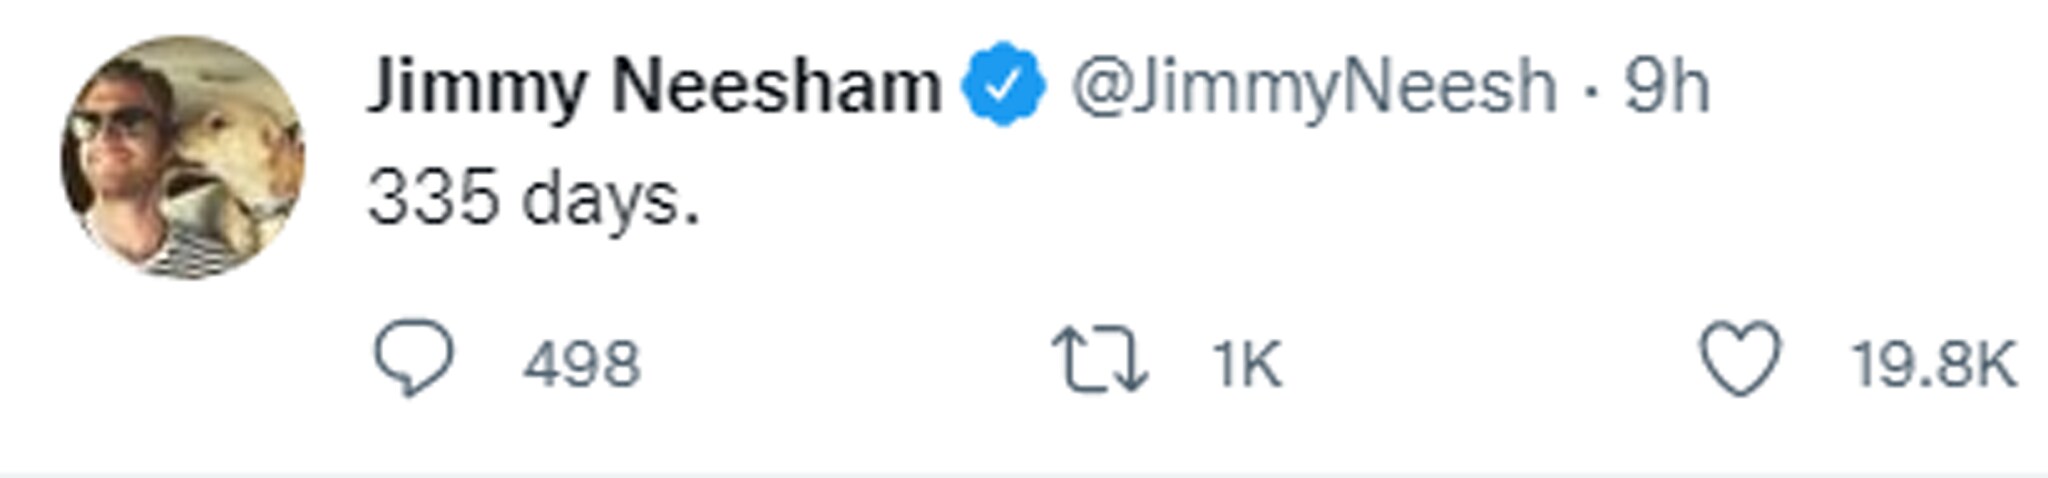 Jimmy neesham tweet